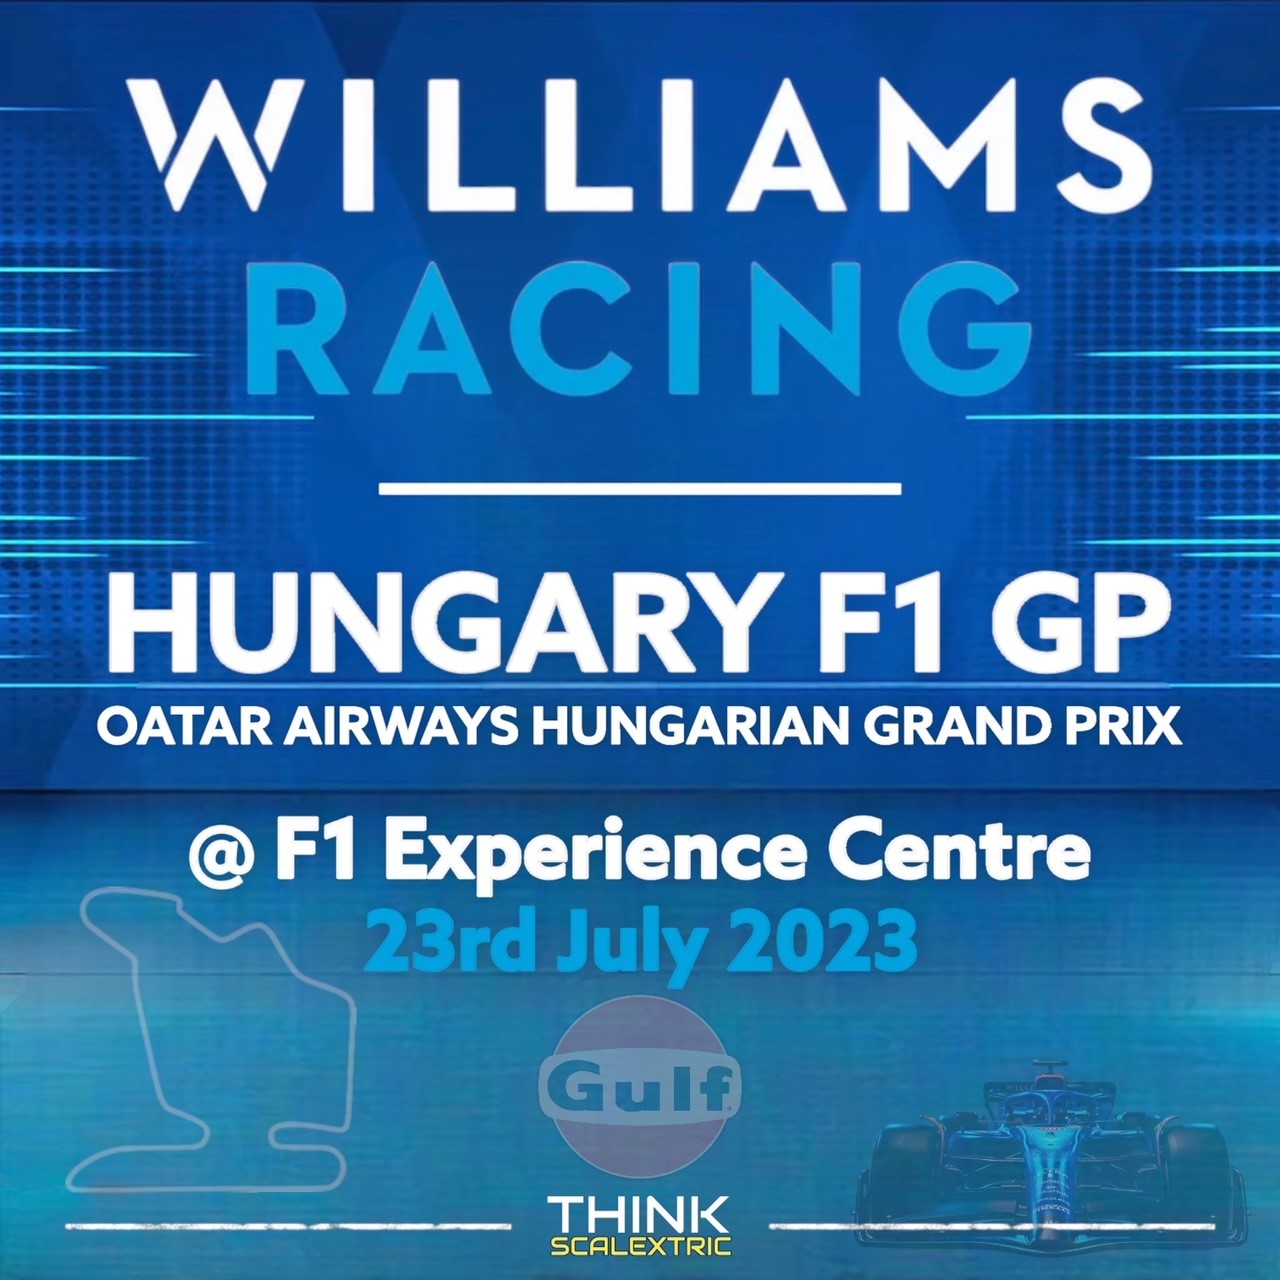 williams f1 racing race day hospitality hungary f1 2023 gp gulf blog logo giant scalextric bespoke track build